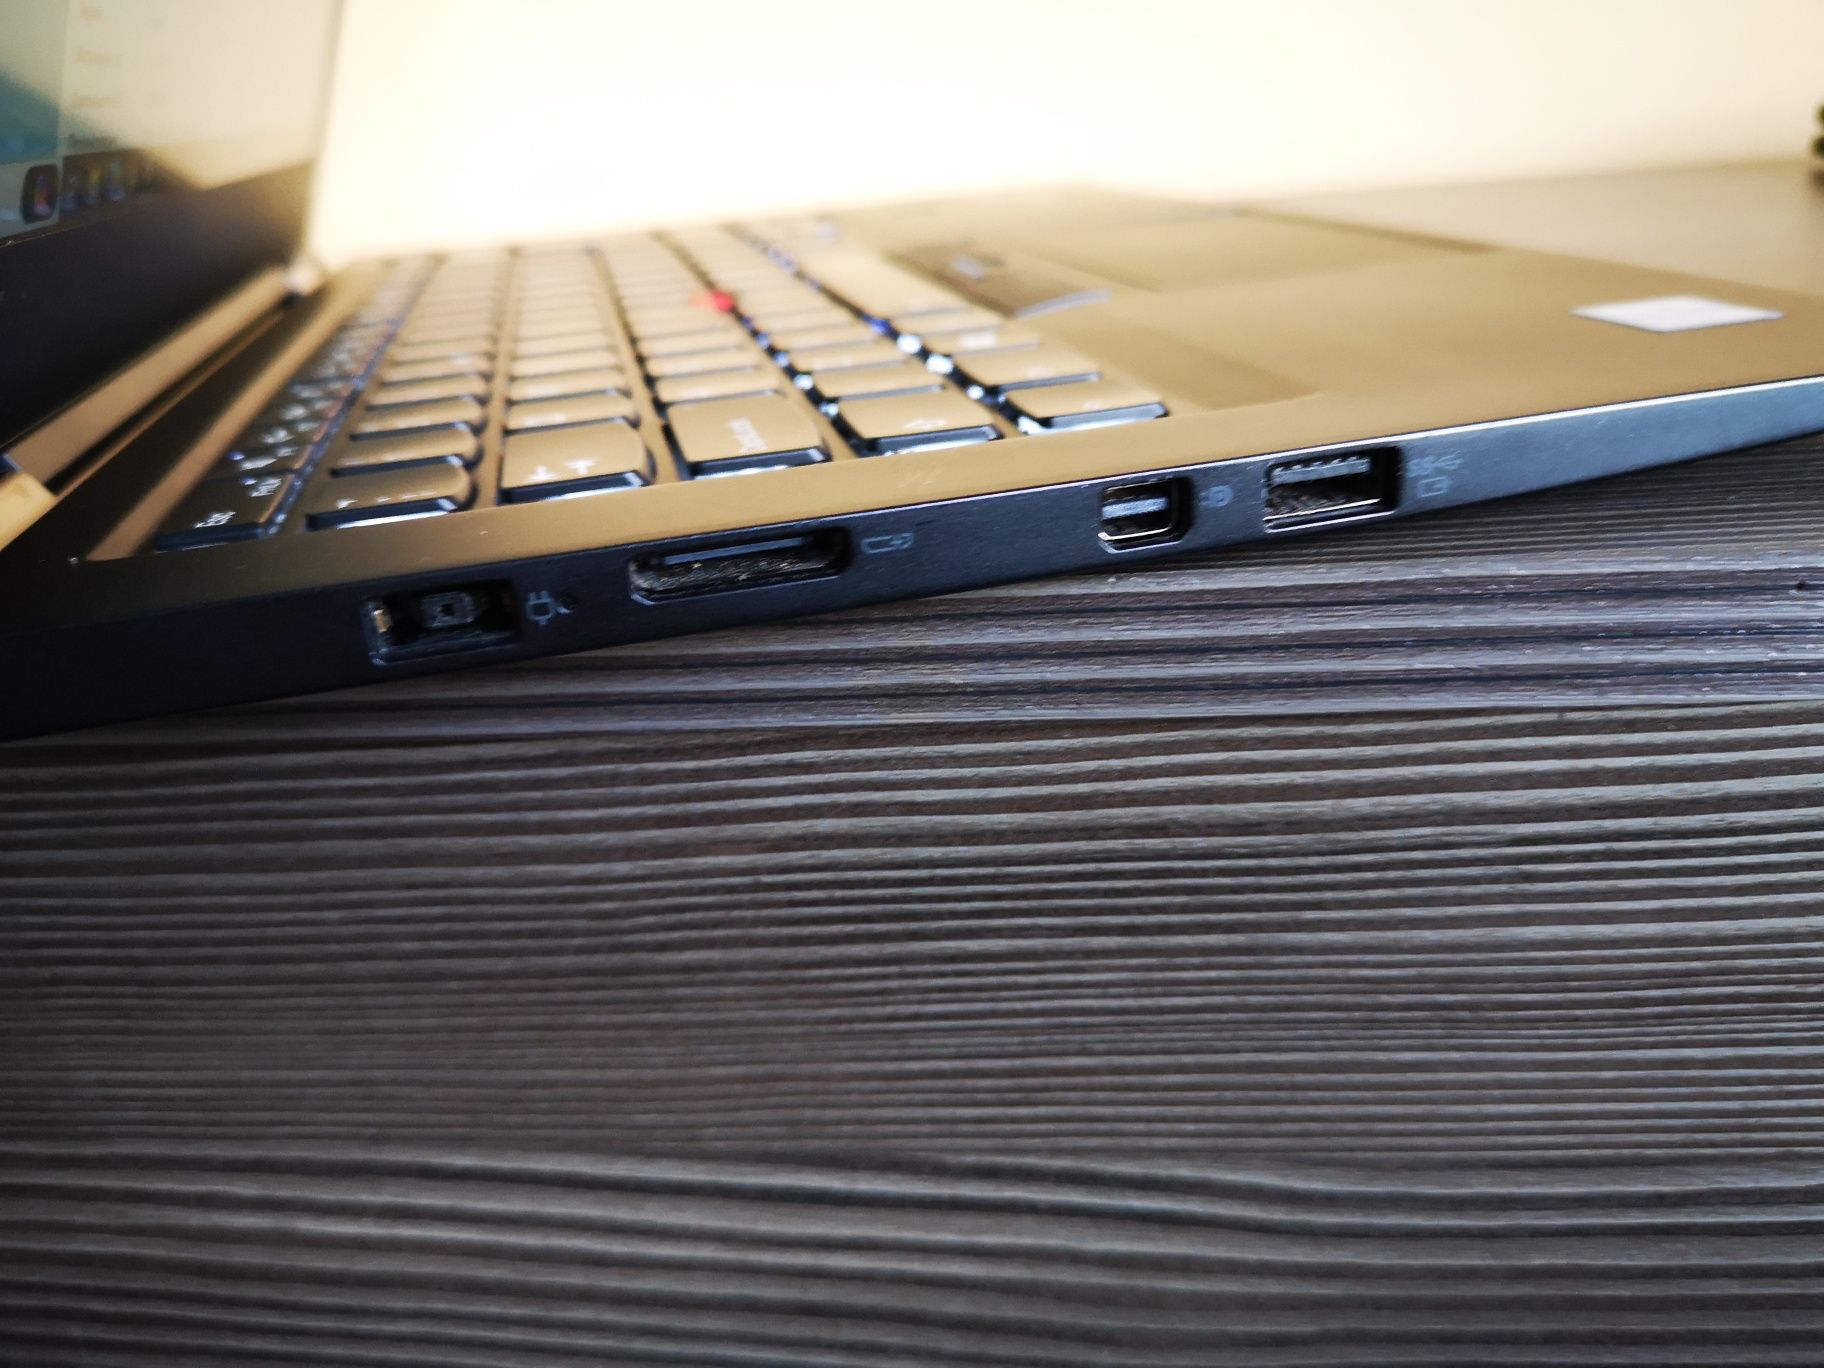 Lenovo ThinkPad X1 Carbon 4th